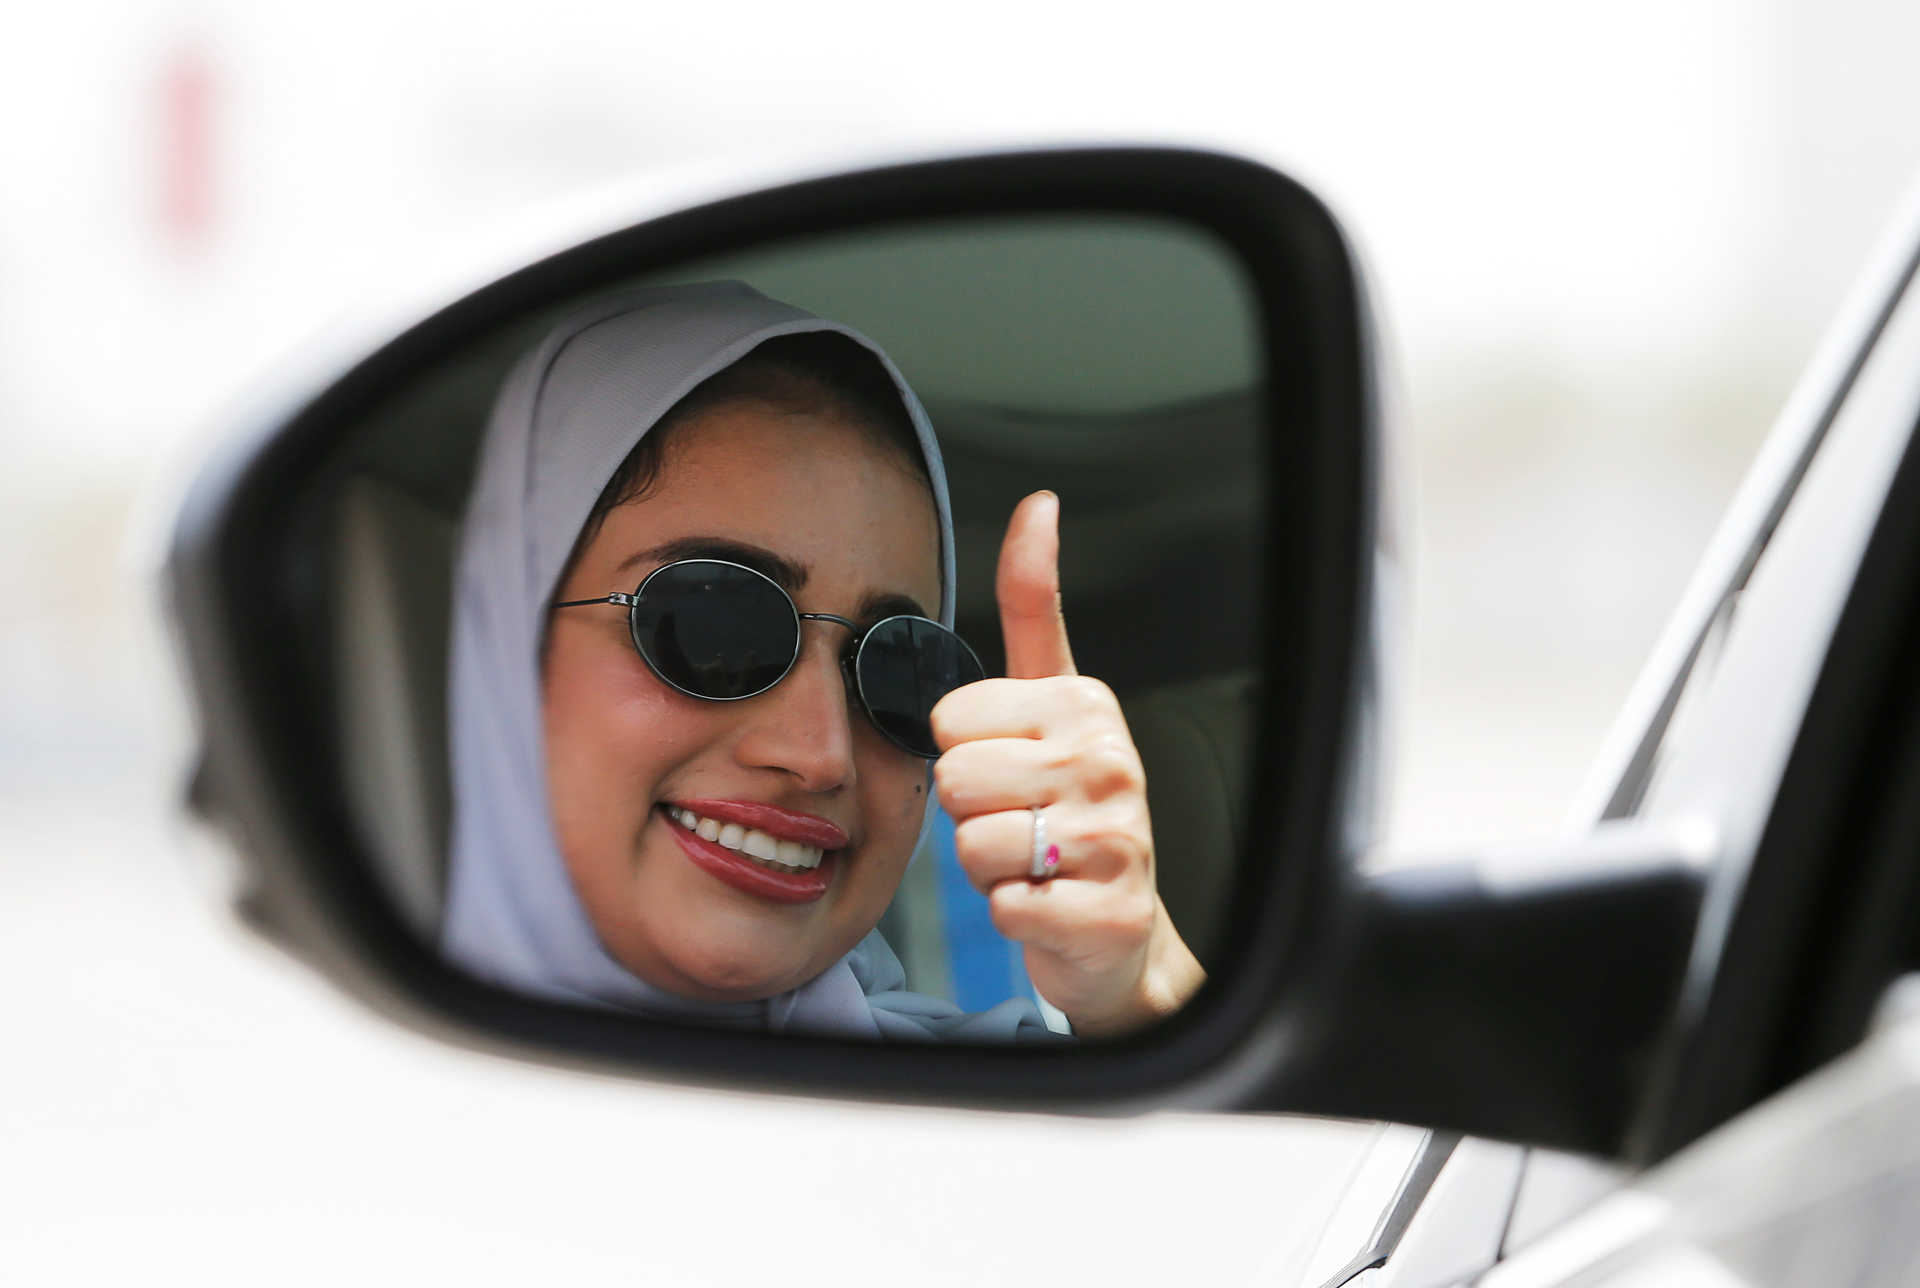 Zuhoor Assiri gestures as she drives her car in Dhahran